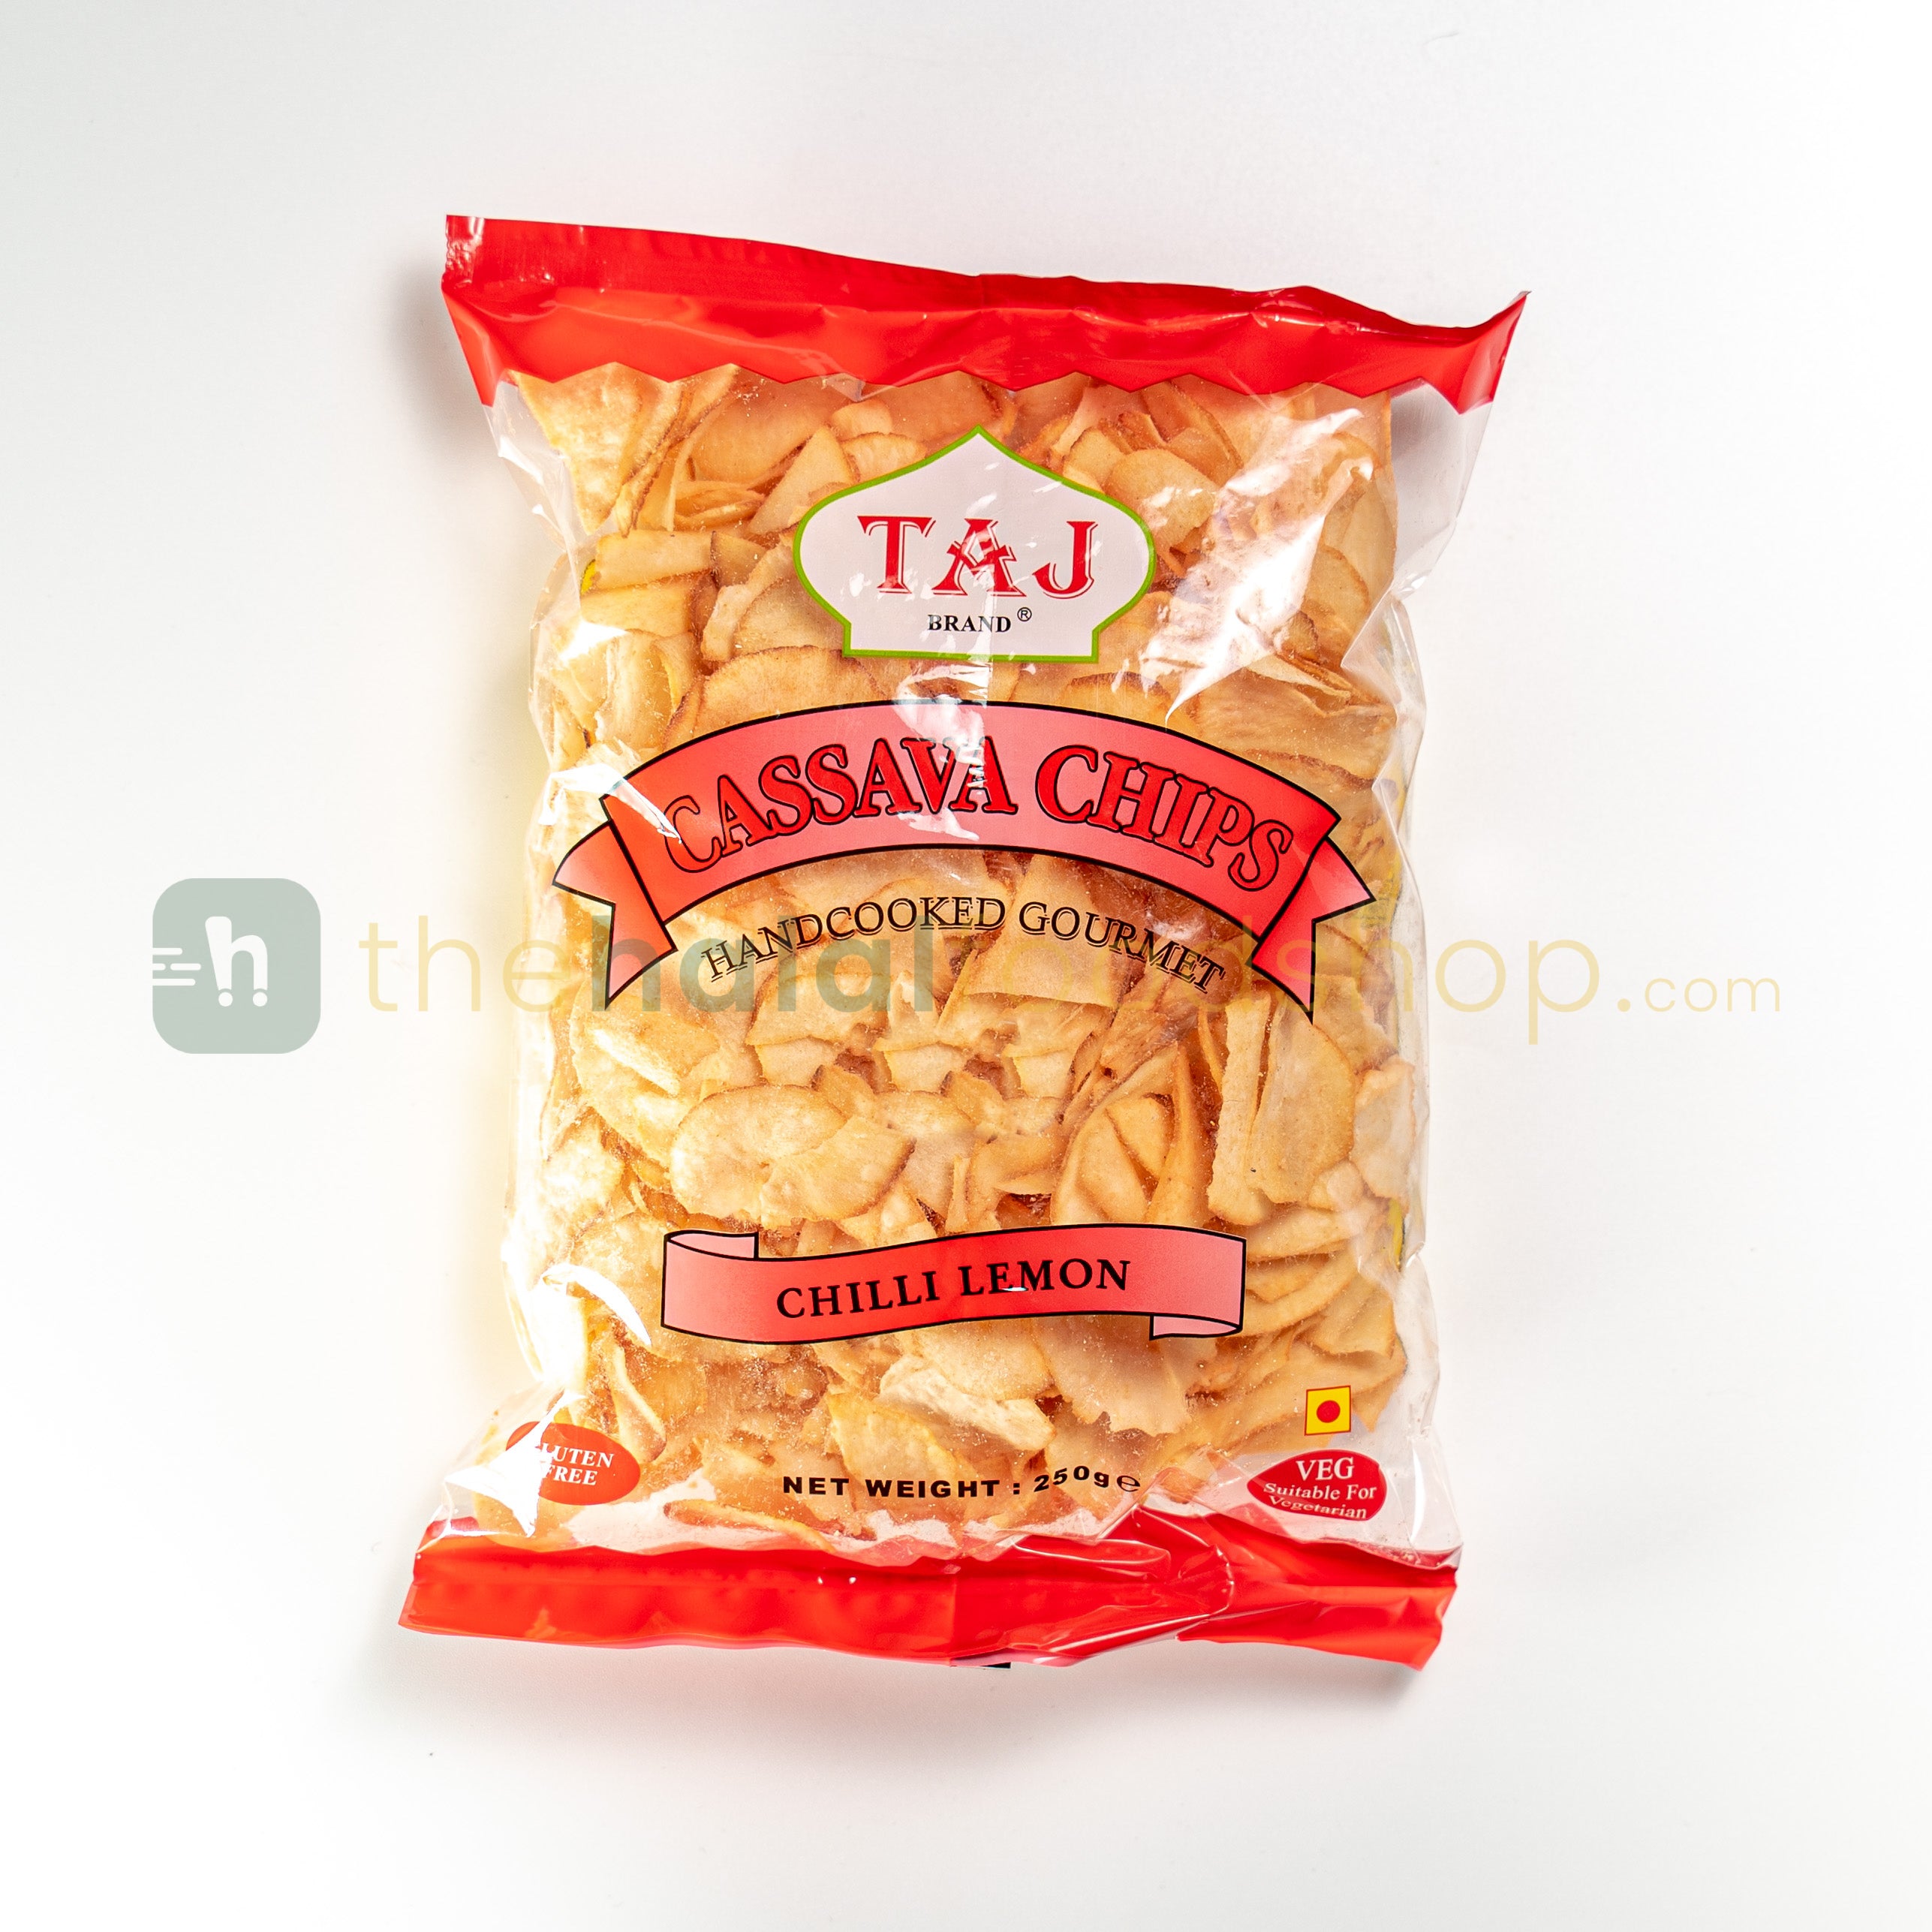 Taj Cassava Chips - Chilli Lemon Flavour (250g)